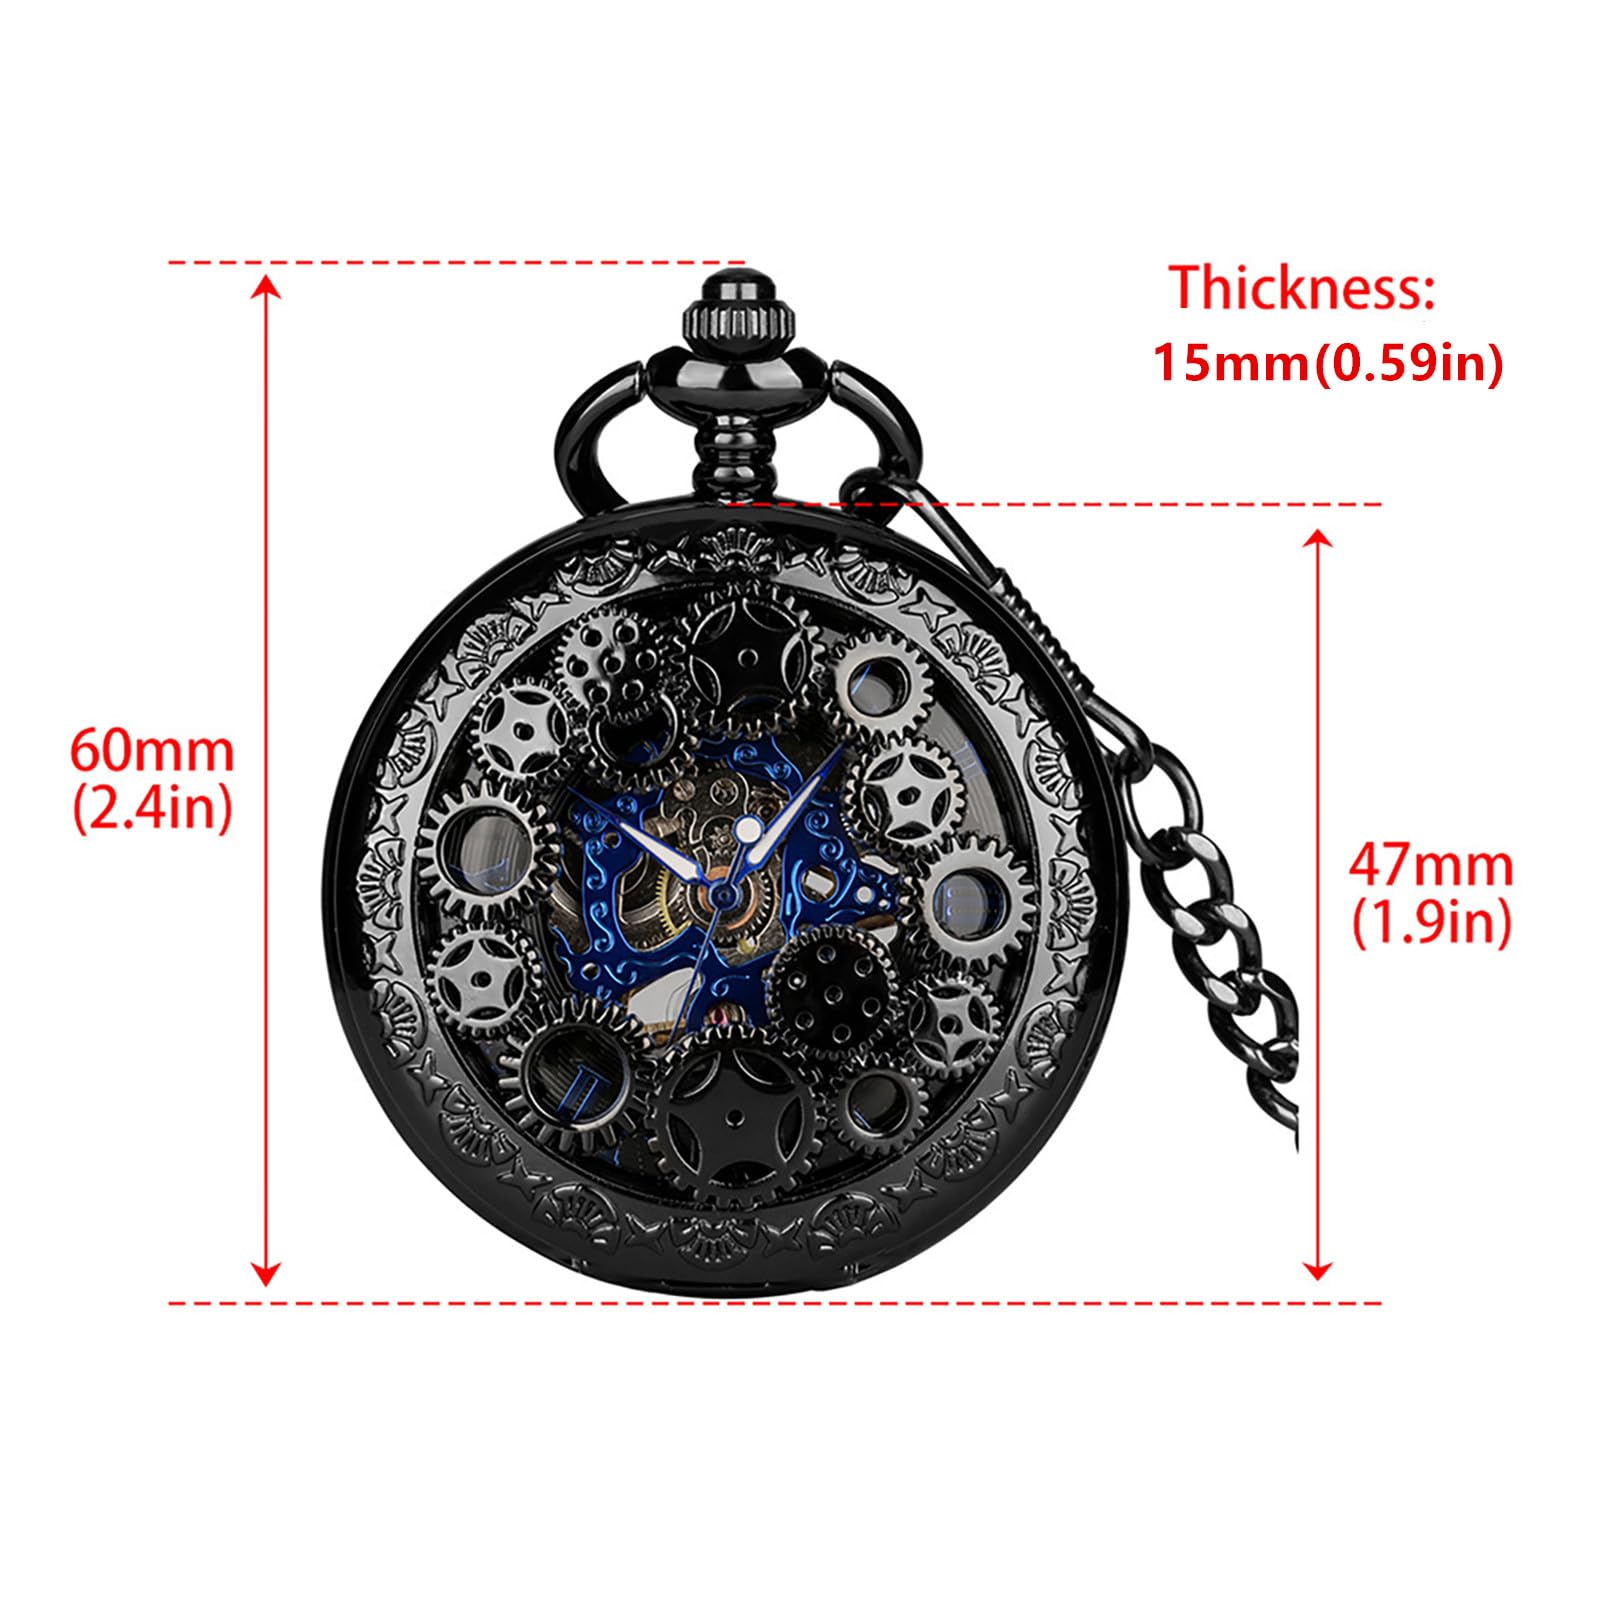 DAGIJIRD Pocket Watch Skeleton Mechanical Double Case Roman Numerals Pocket Watch for Men Women